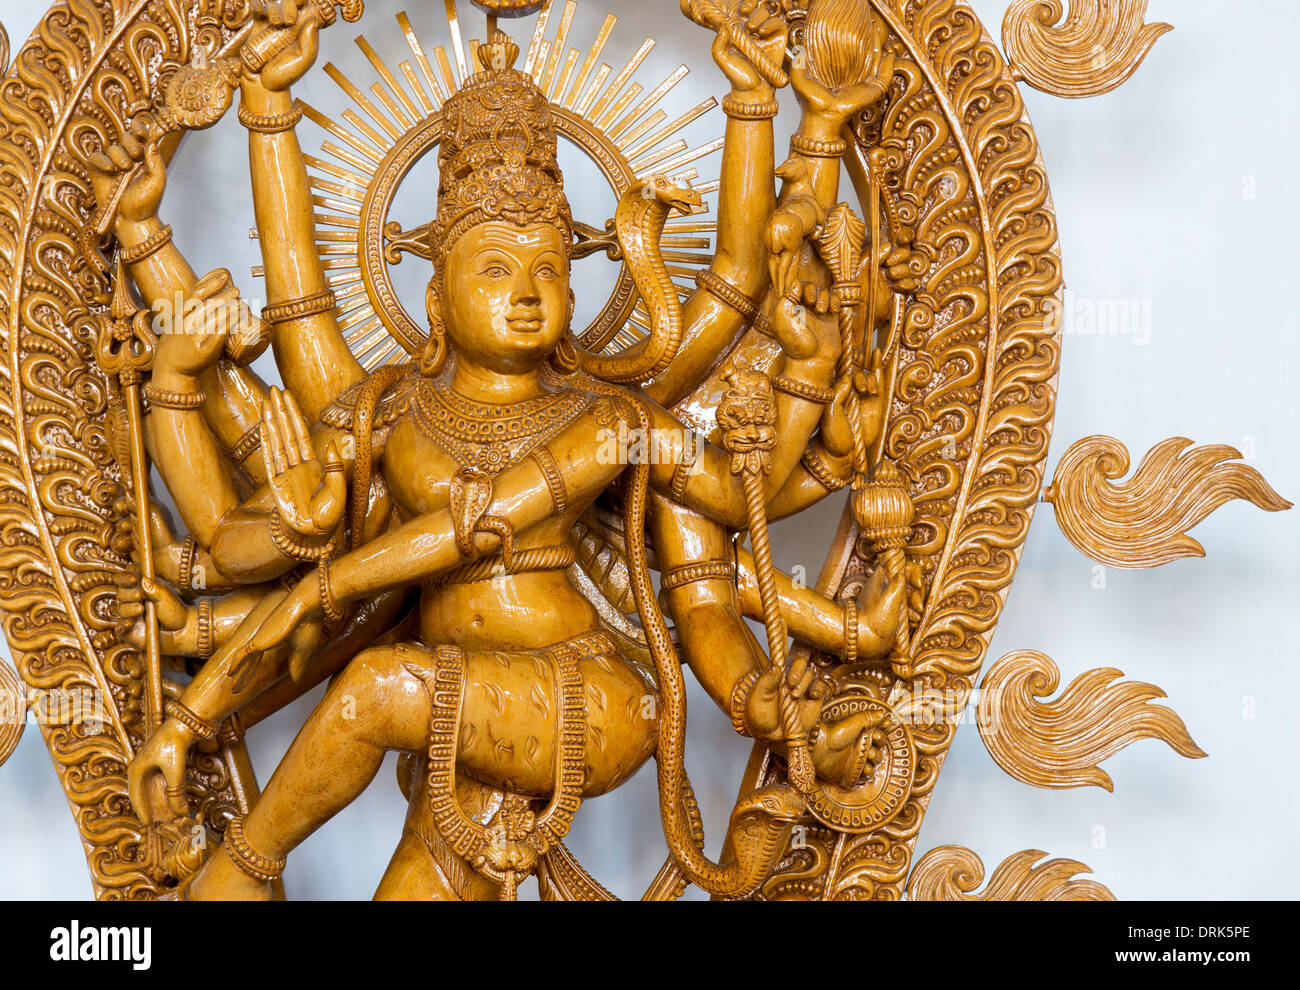 Sandelholz Dancing Lord Shiva Statue, Nataraja, Hindu-Gott vor weißem Hintergrund Stockfoto